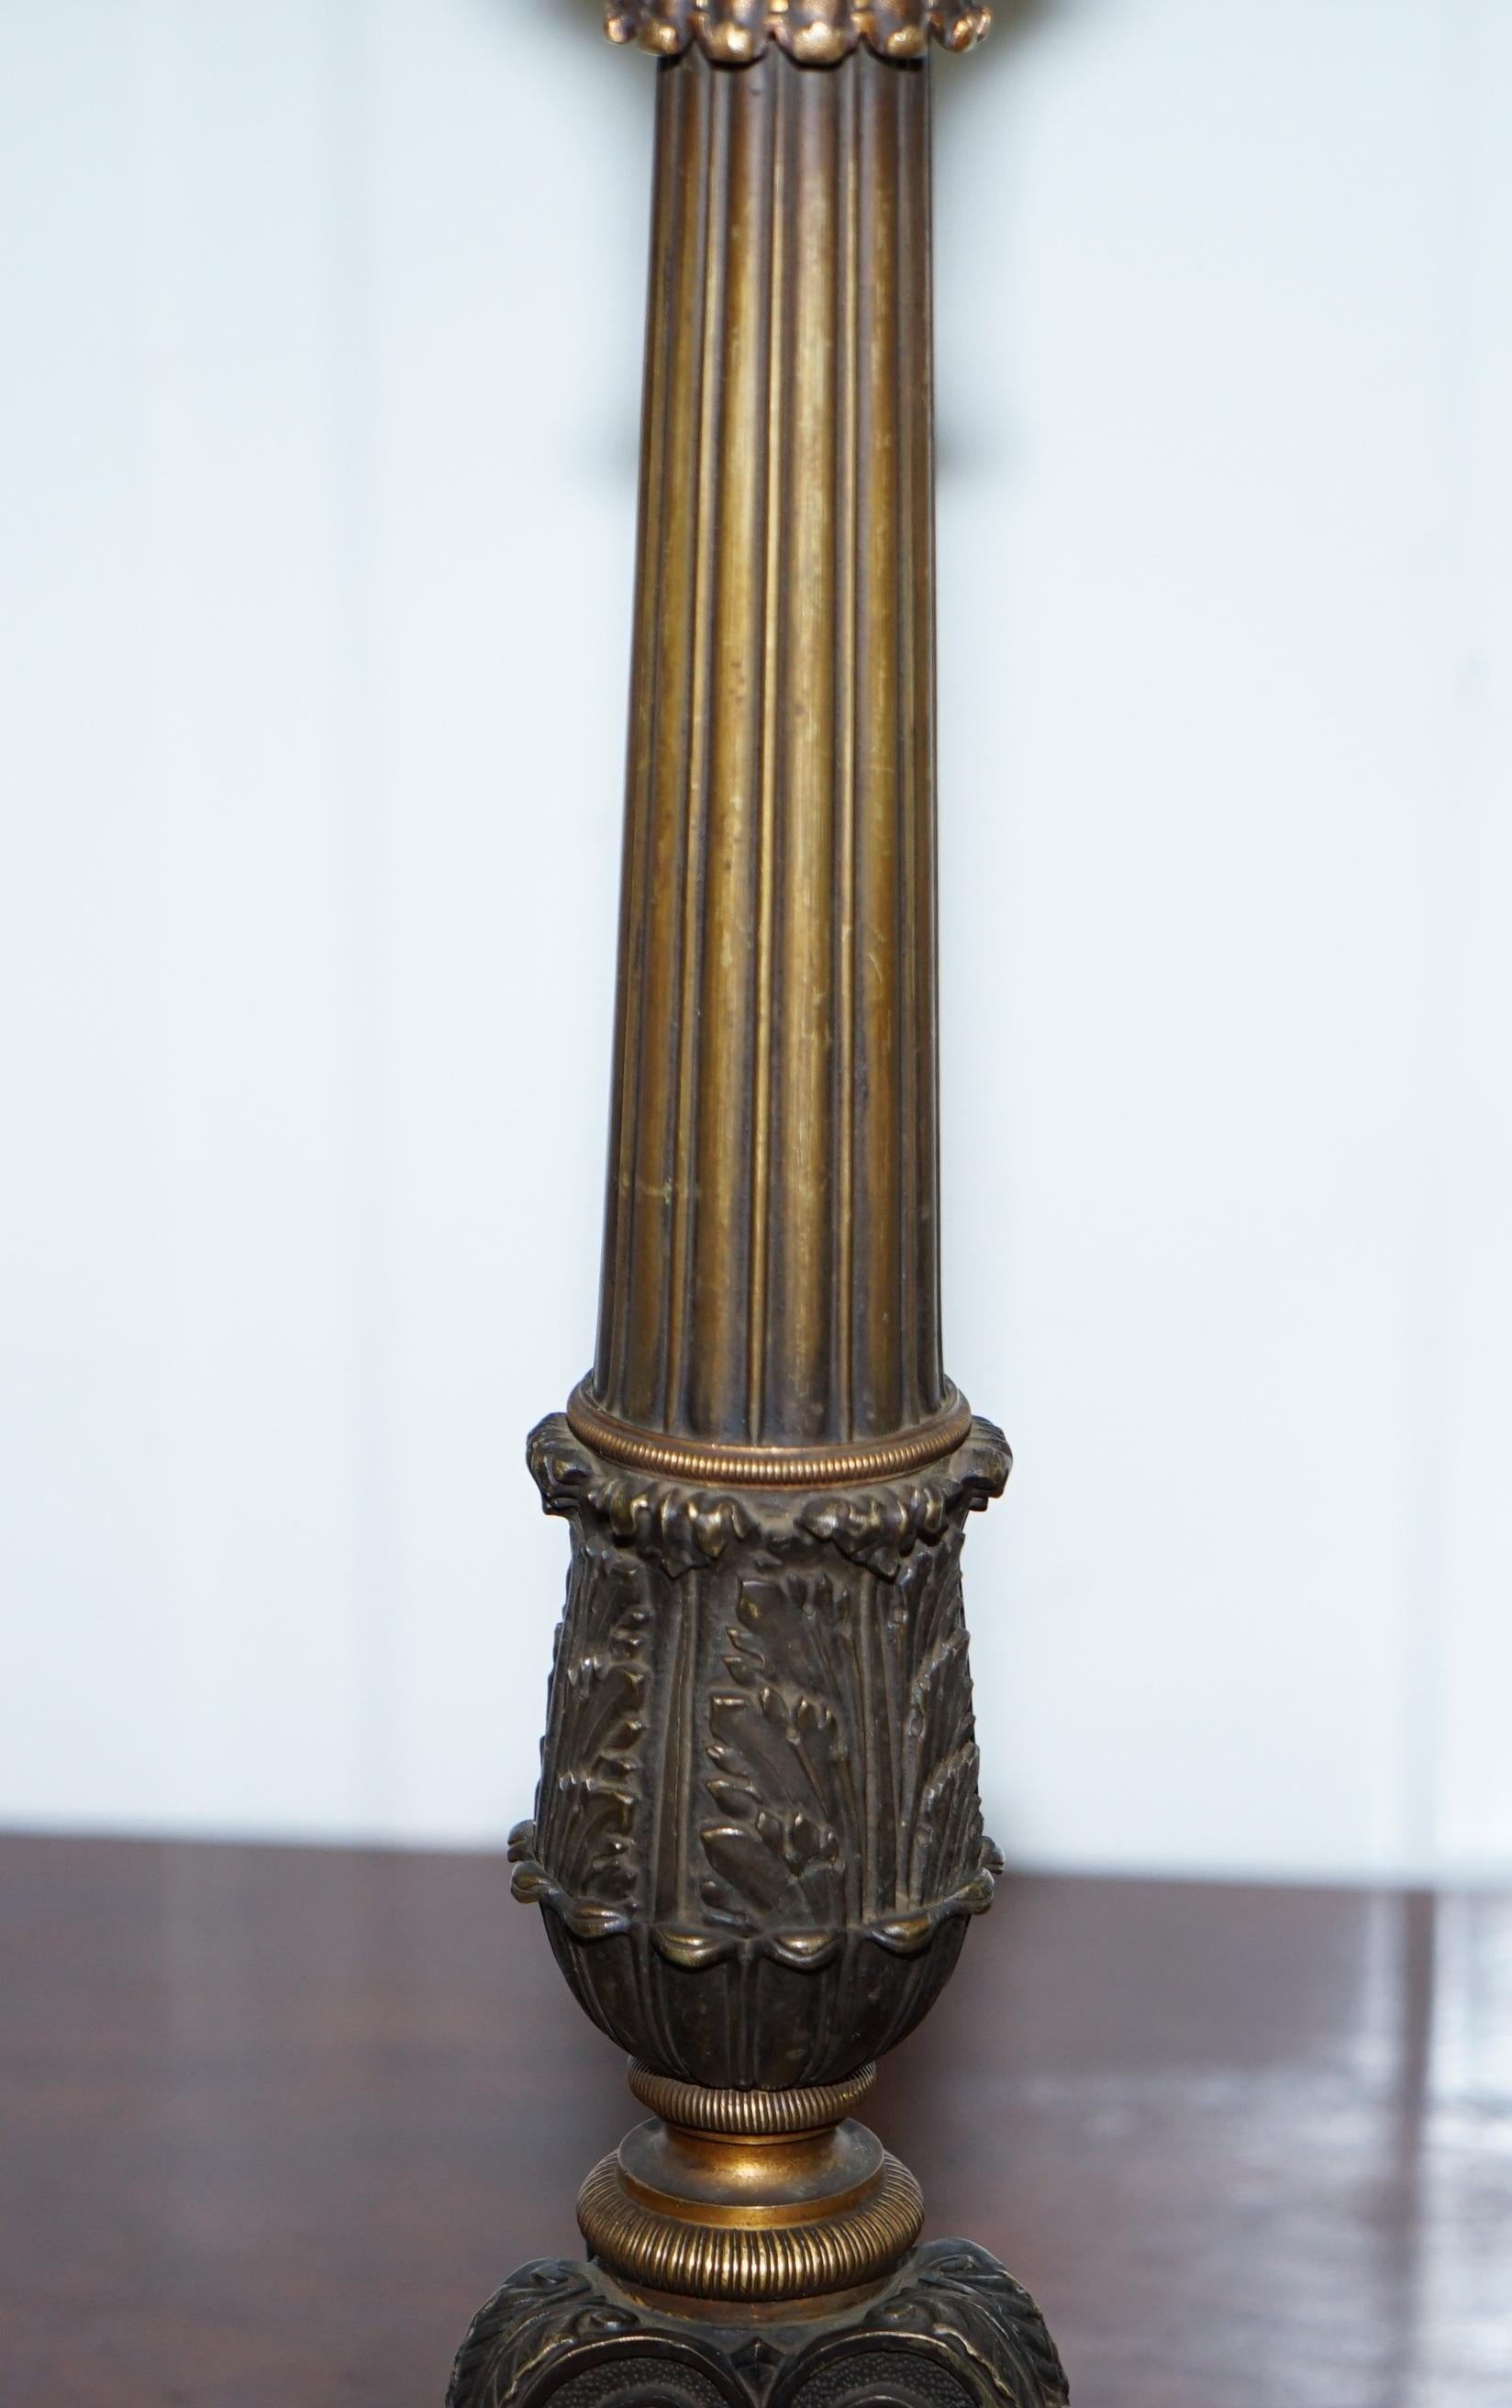 English Large Solid Bronze Corinthian Pillared Candlestick Lamp Conversion, circa 1840 